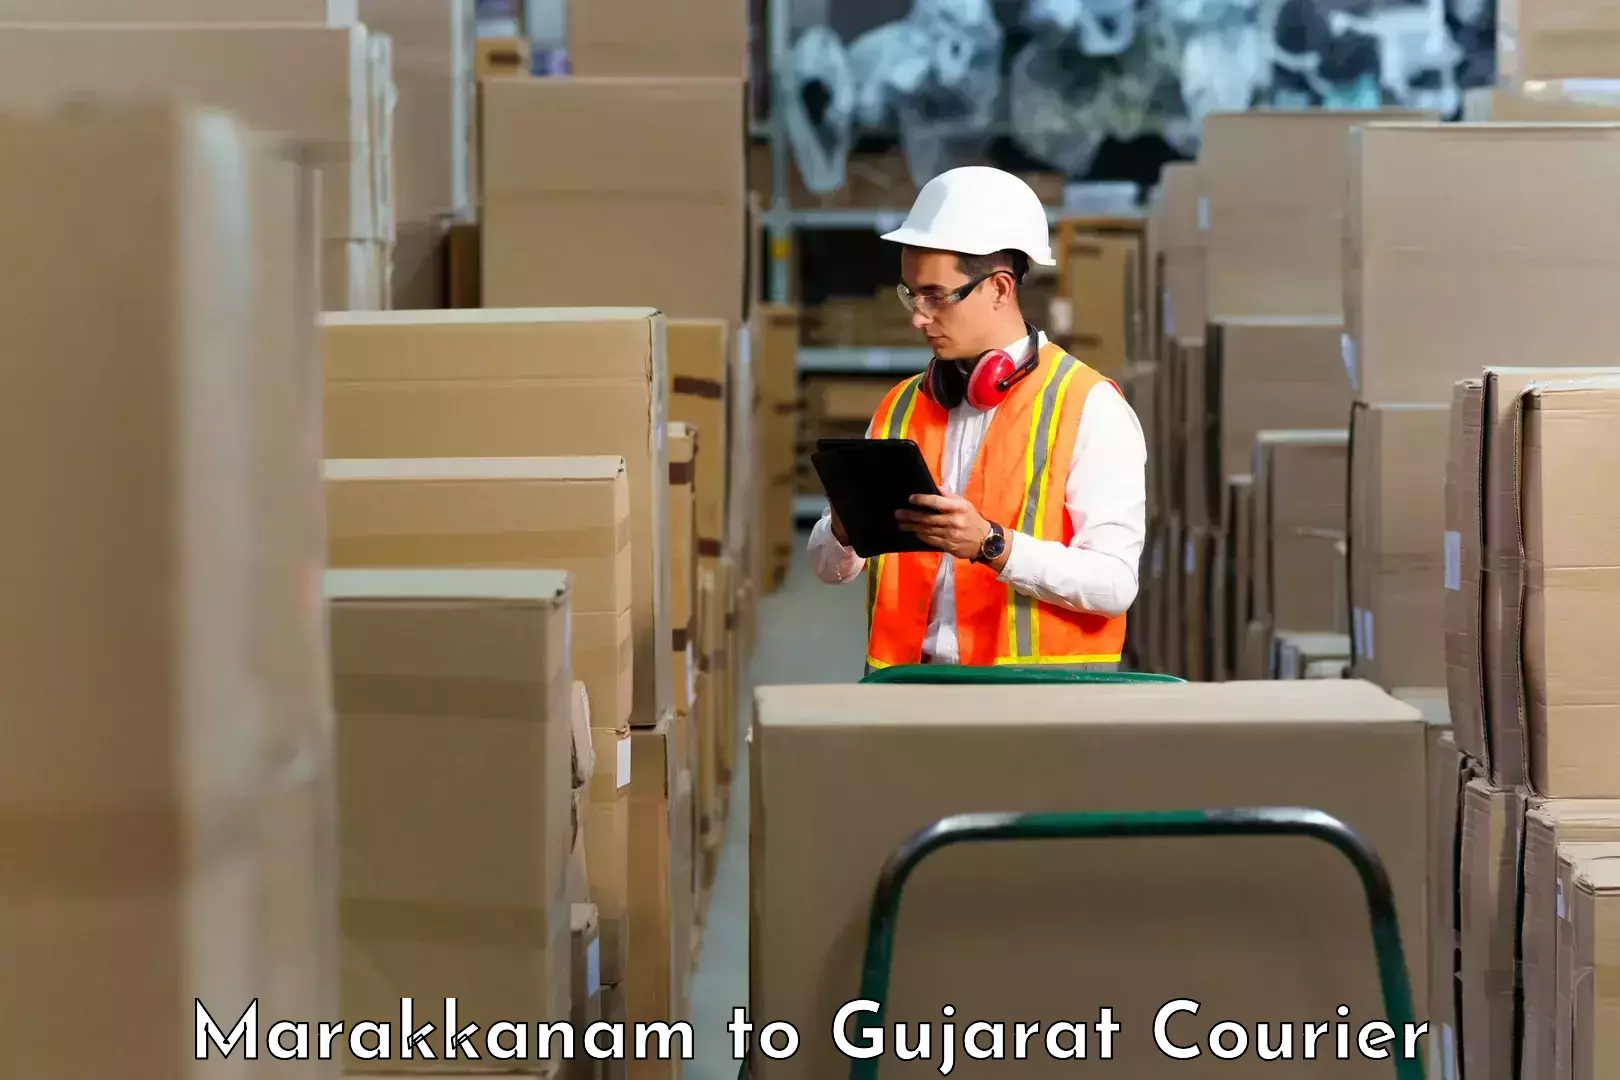 Express delivery network Marakkanam to Patan Gujarat